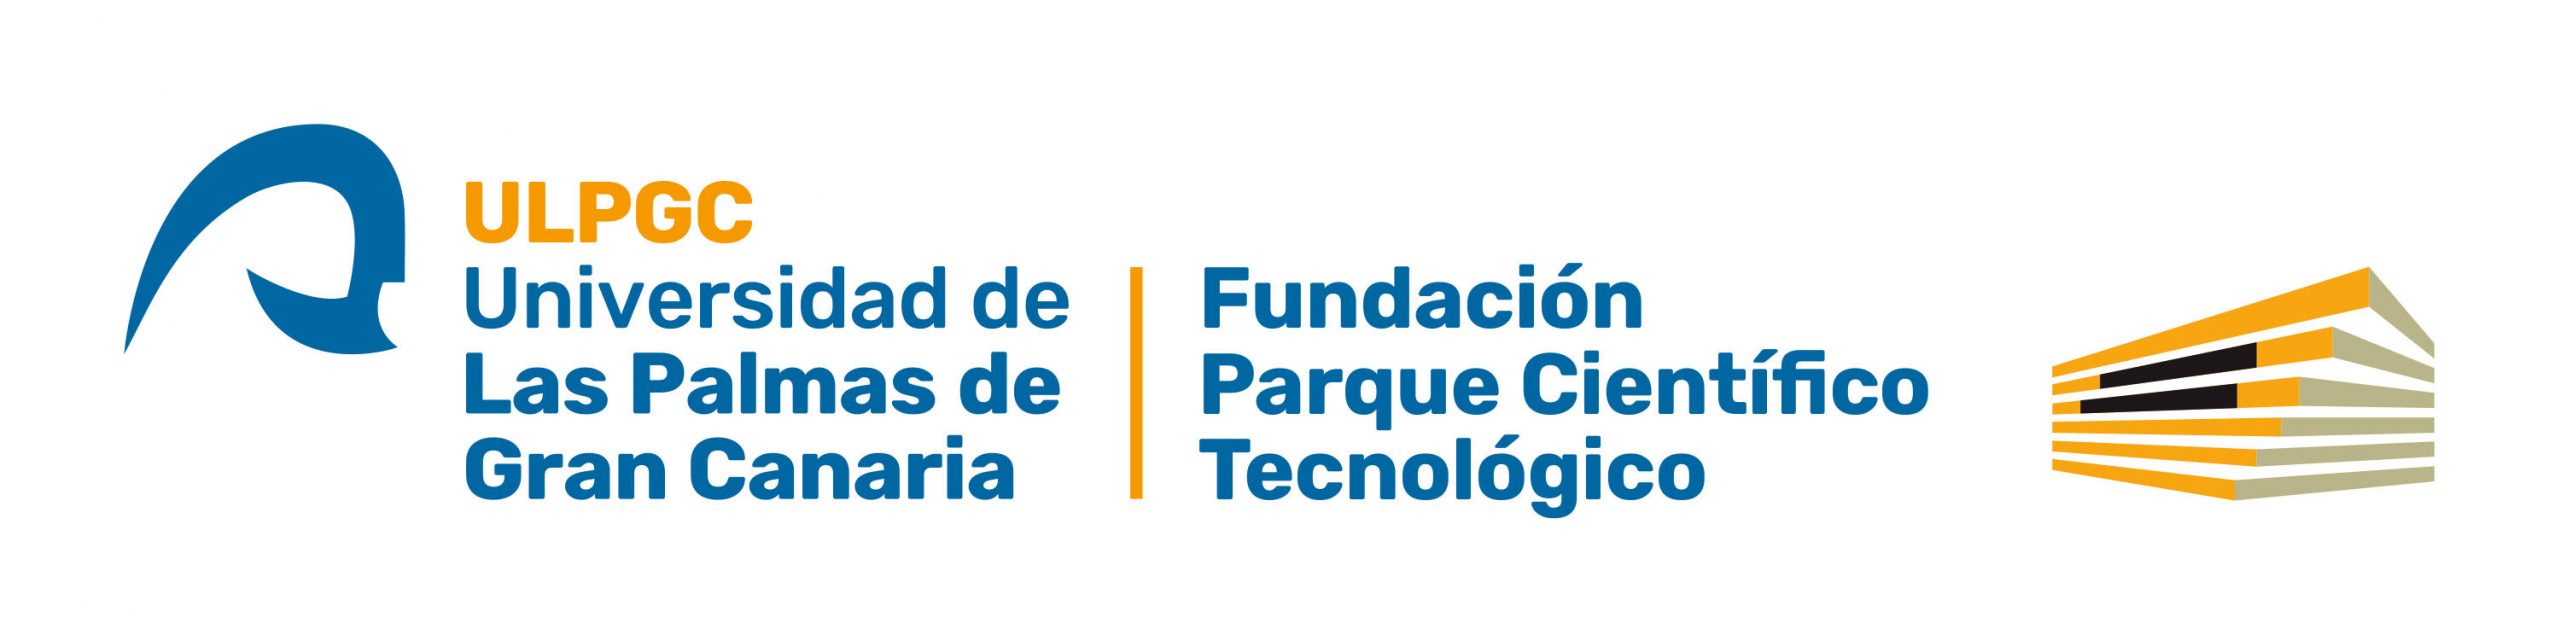 Fundación Parque Científico Tecnológico